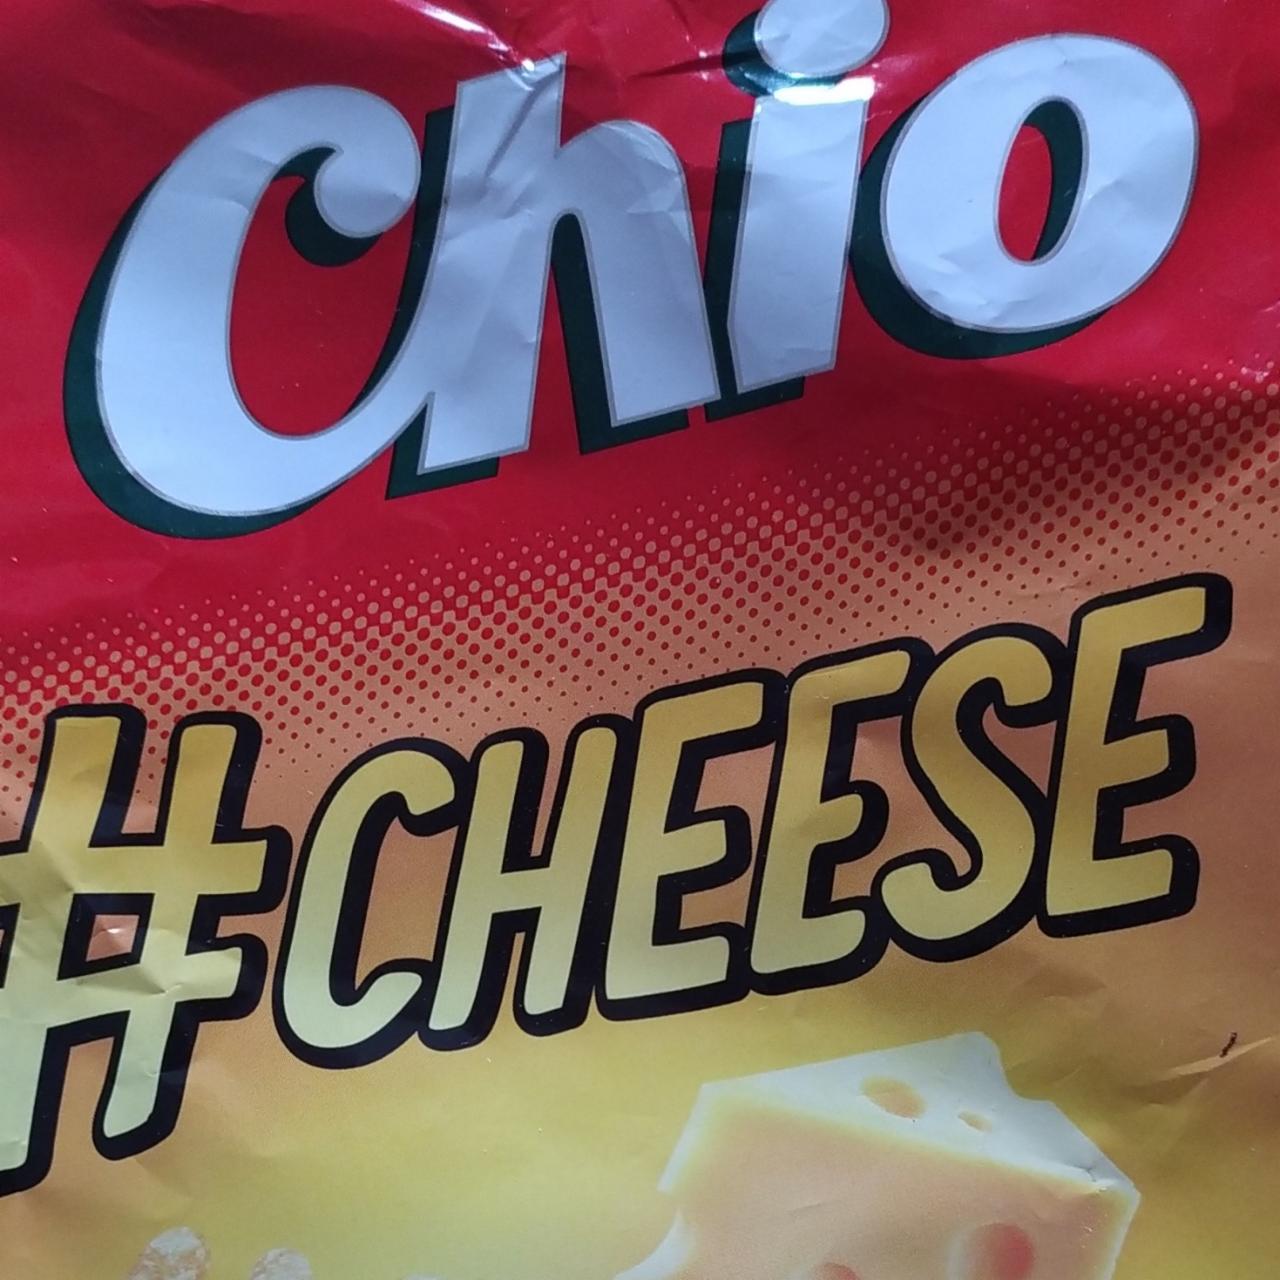 Fotografie - Chio #cheese